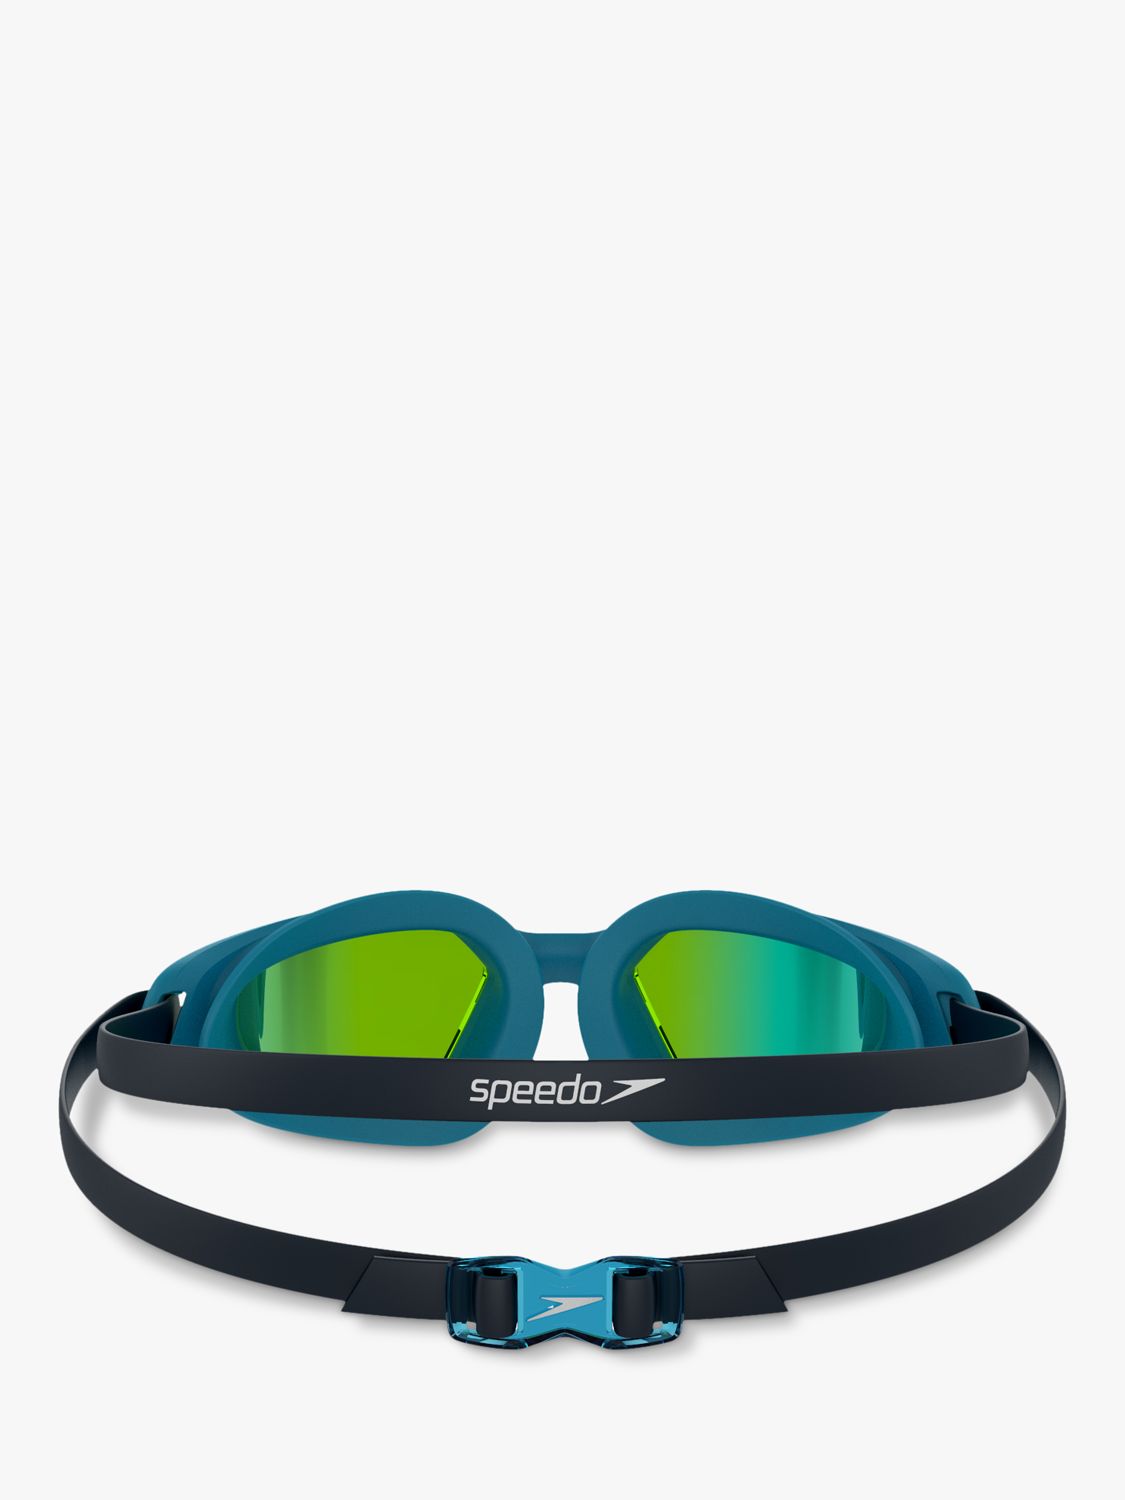 Speedo Children's Hydropulse Mirror Swimming Goggles, Turquoise